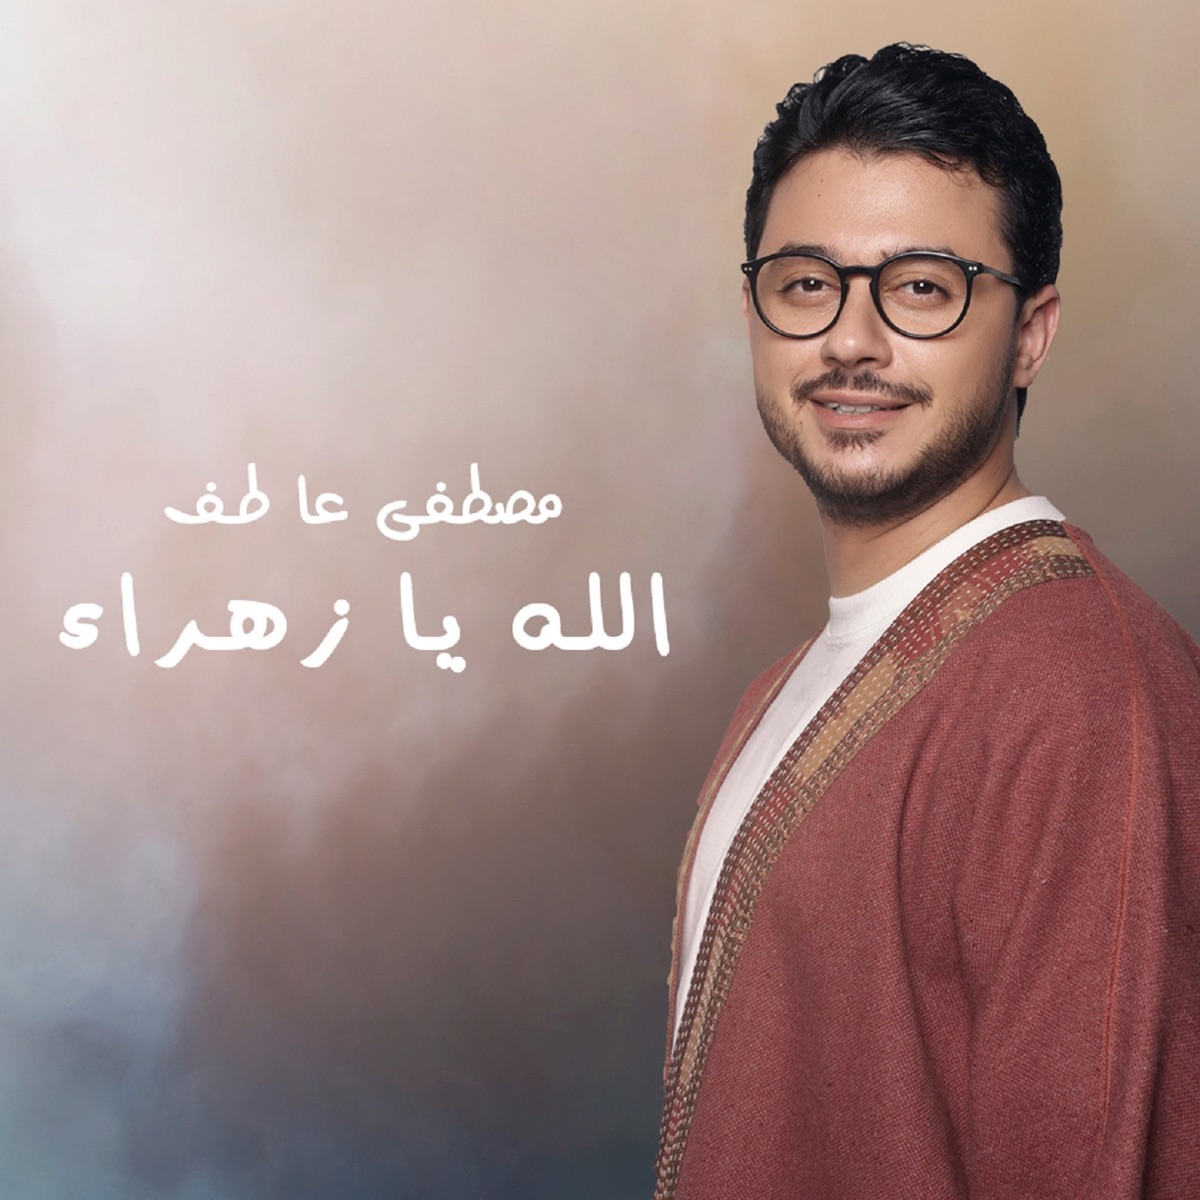 الله يا زهراء - Single - Album by مصطفى عاطف - Apple Music